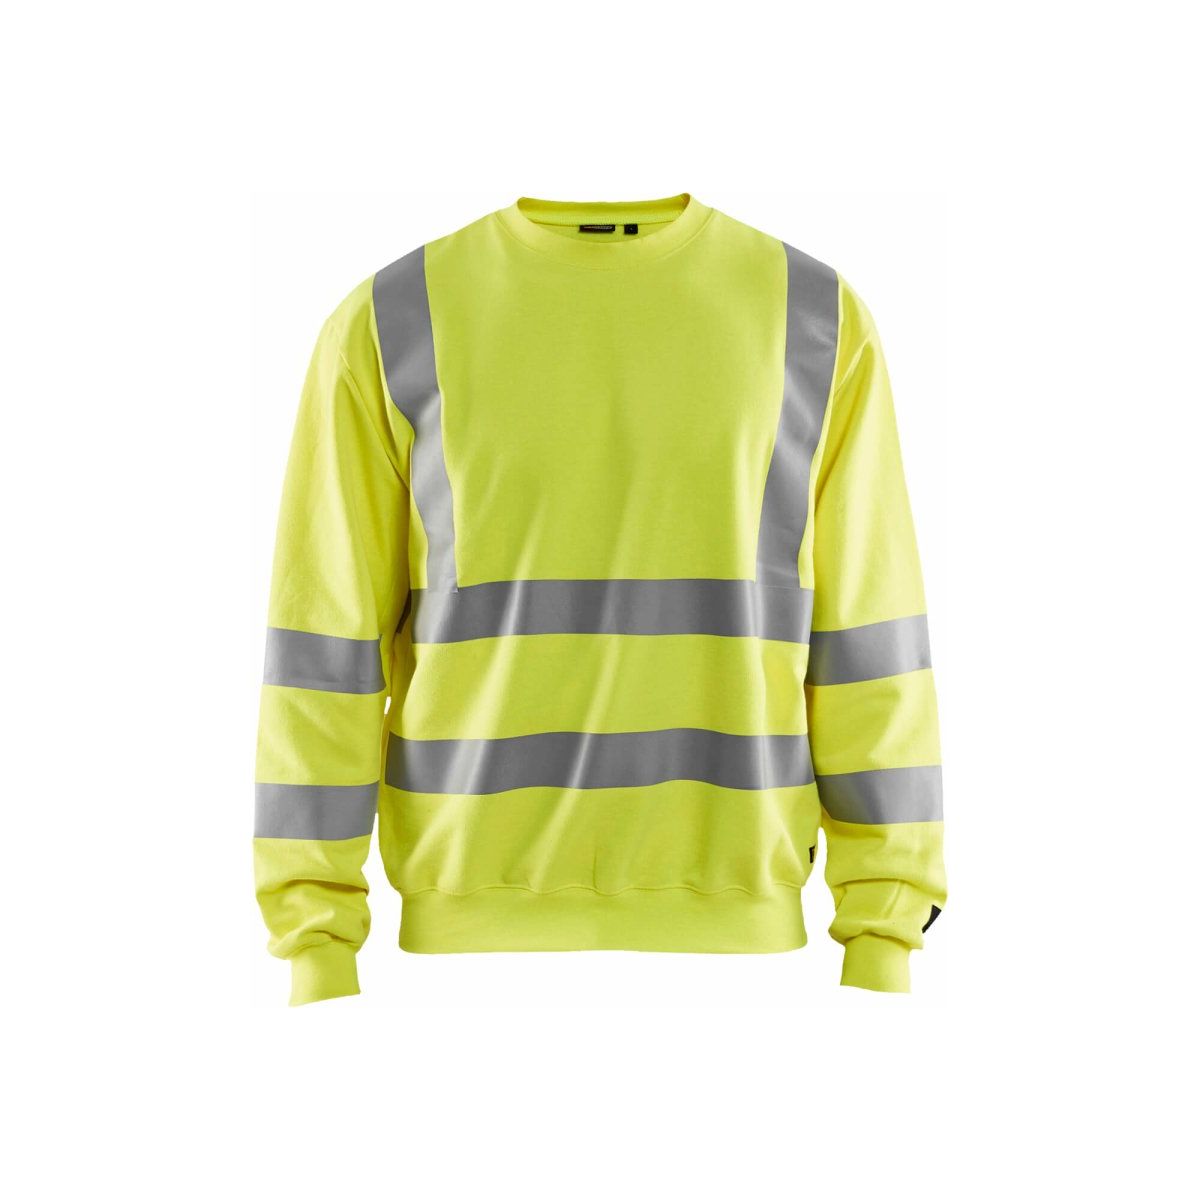 Blaklader 3087 Multinorm Hi-Vis Sweatshirt - Mens (30871750) - workweargurus.com